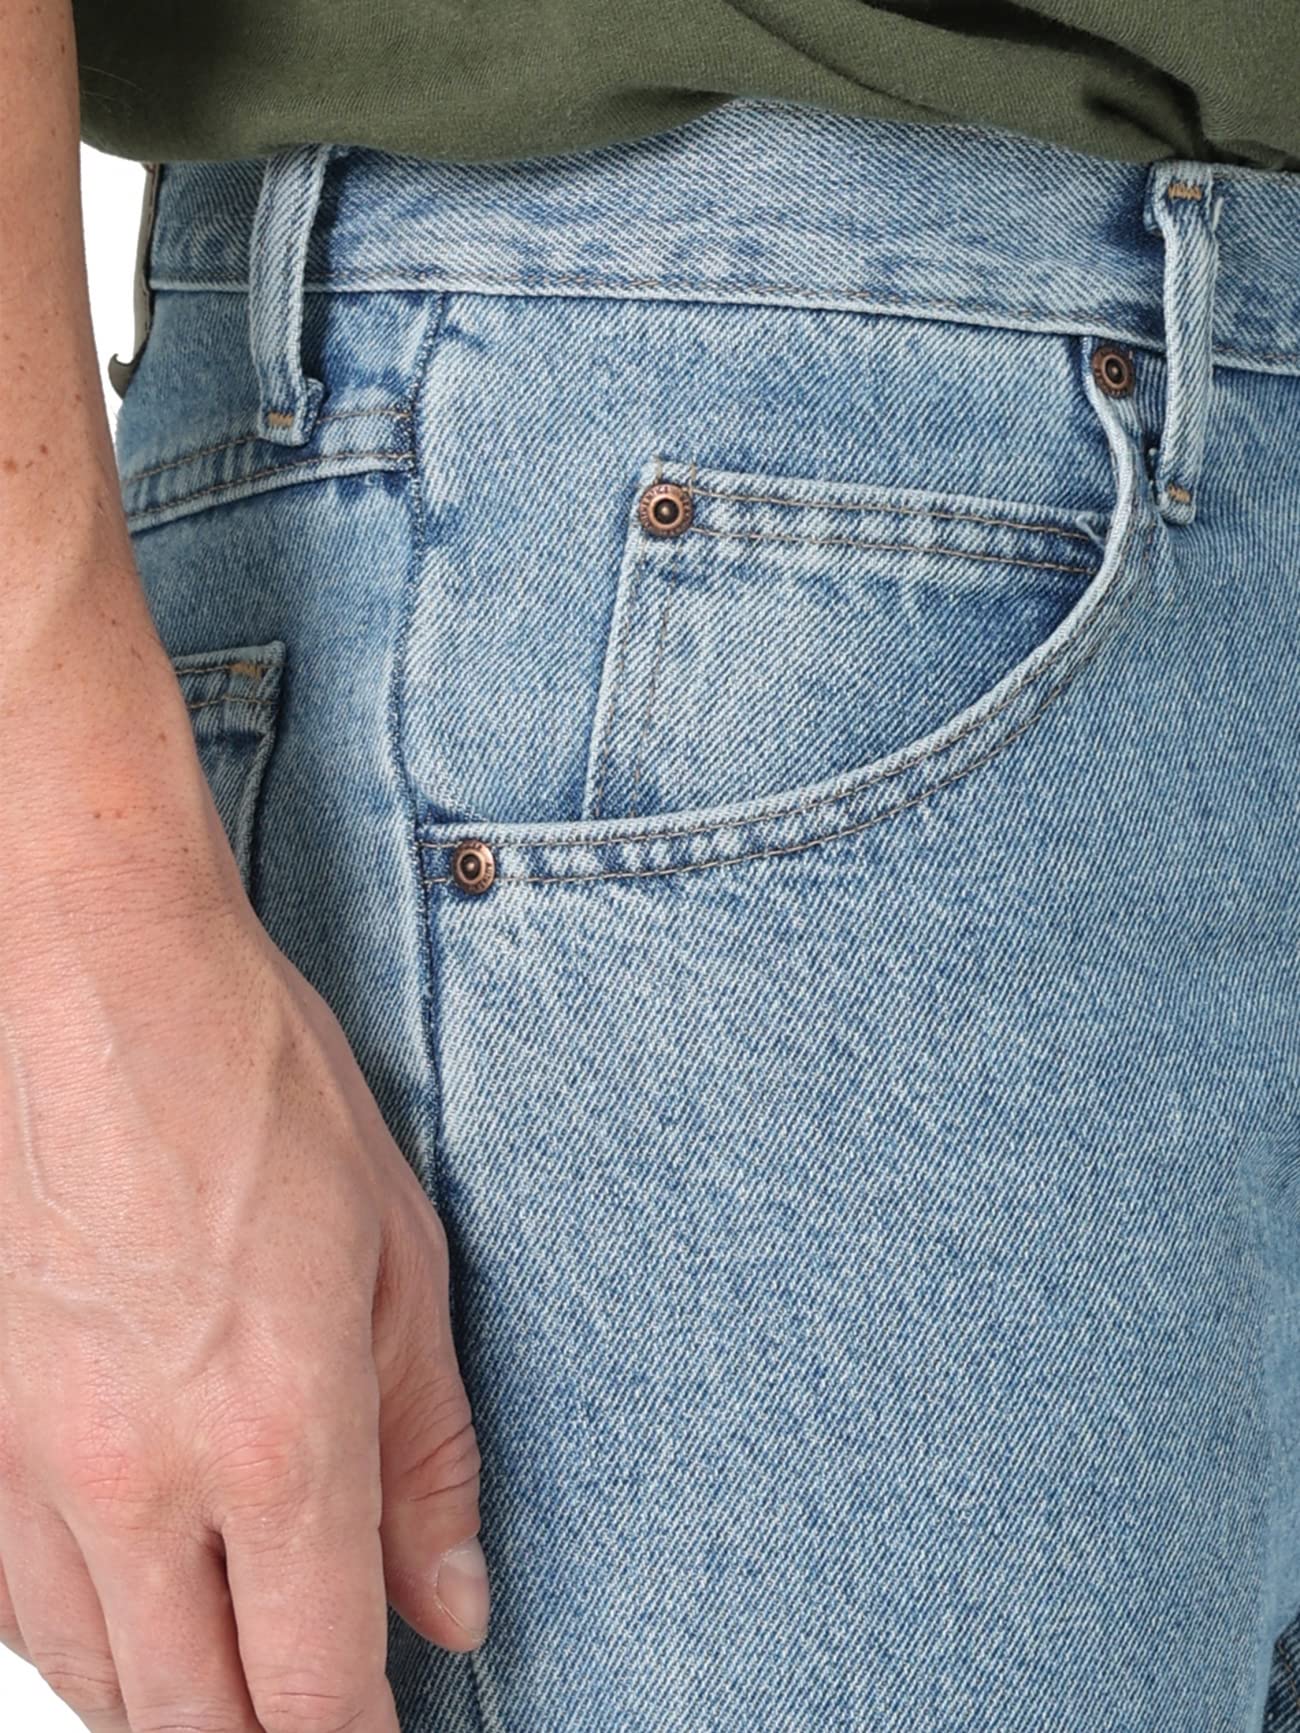 Wrangler Authentics Men's Classic 5-Pocket Regular Fit Cotton Jean, Light Stonewash, 32W x 30L